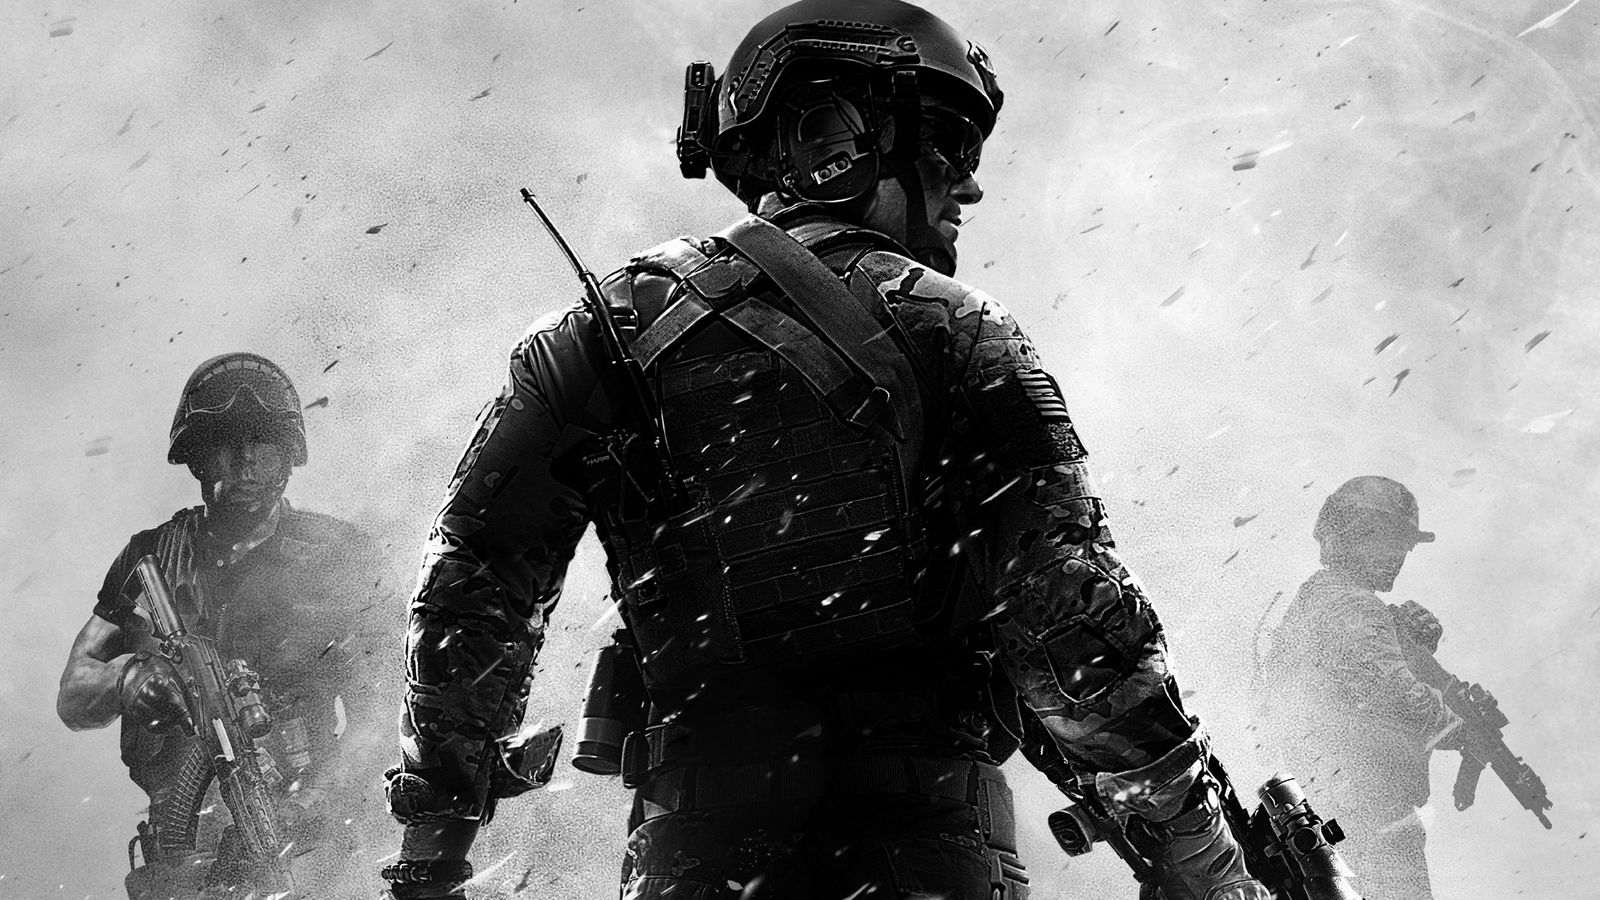  Call Of Duty Wallpaper For Desktop Background